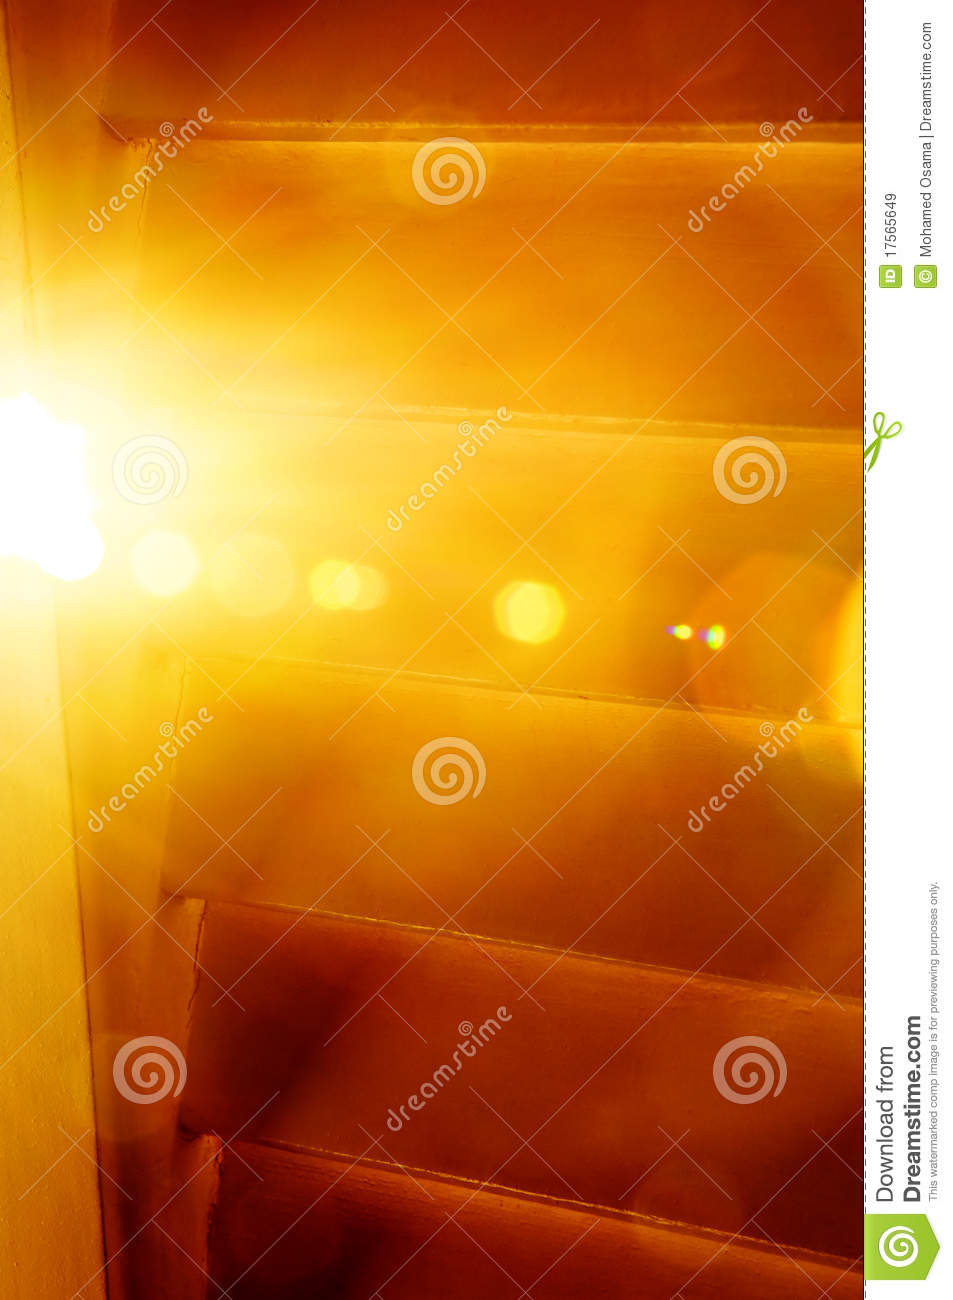 Morning Sun Flares Behind Window Royalty Free Stock Images   Image    